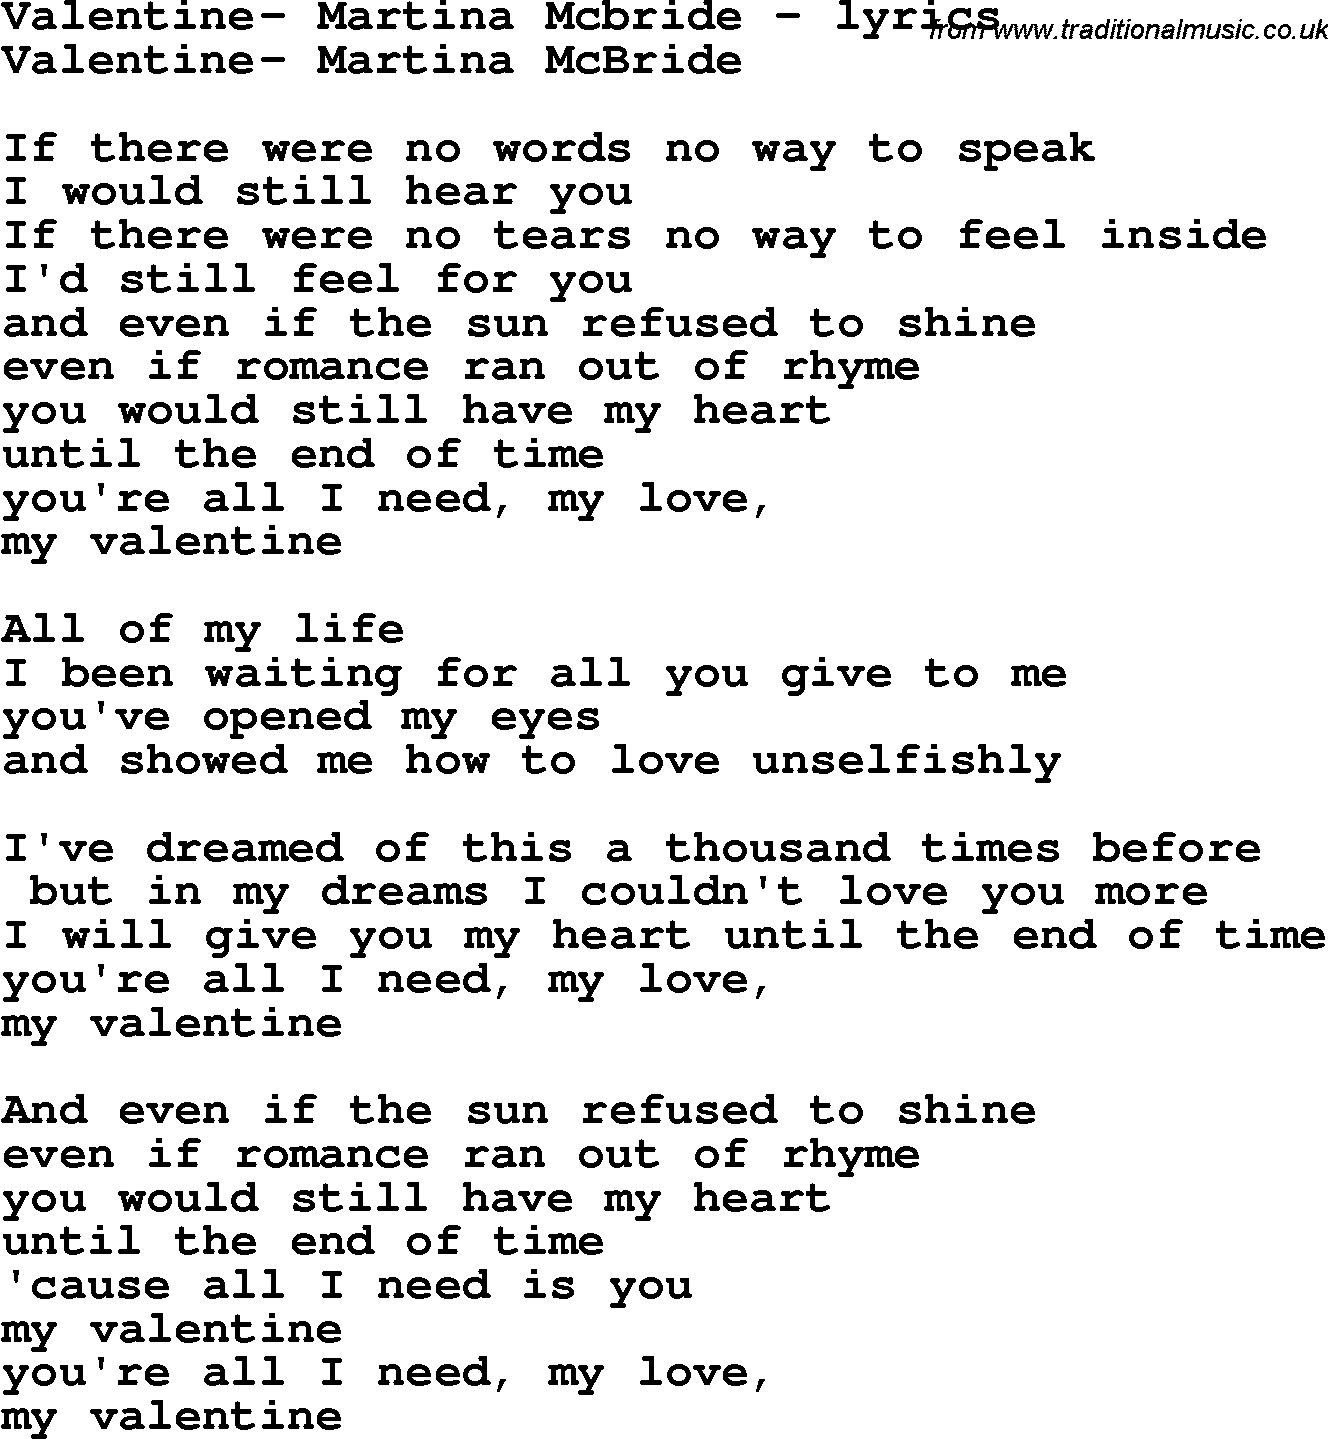 Love Song Lyrics for: Valentine- Martina Mcbride